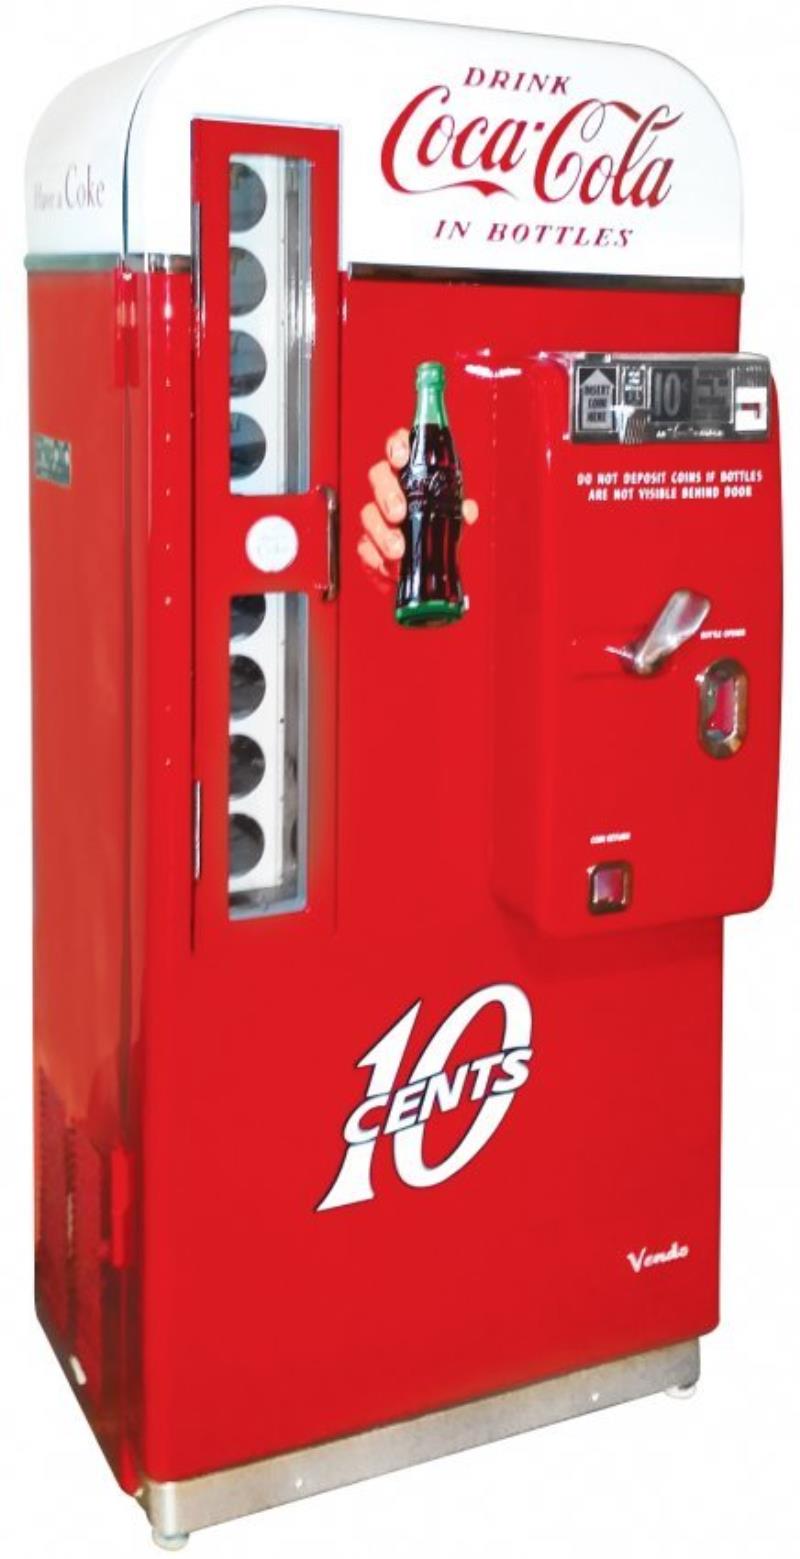 Coca-Cola machine, Vendo 81D, one of the most popular